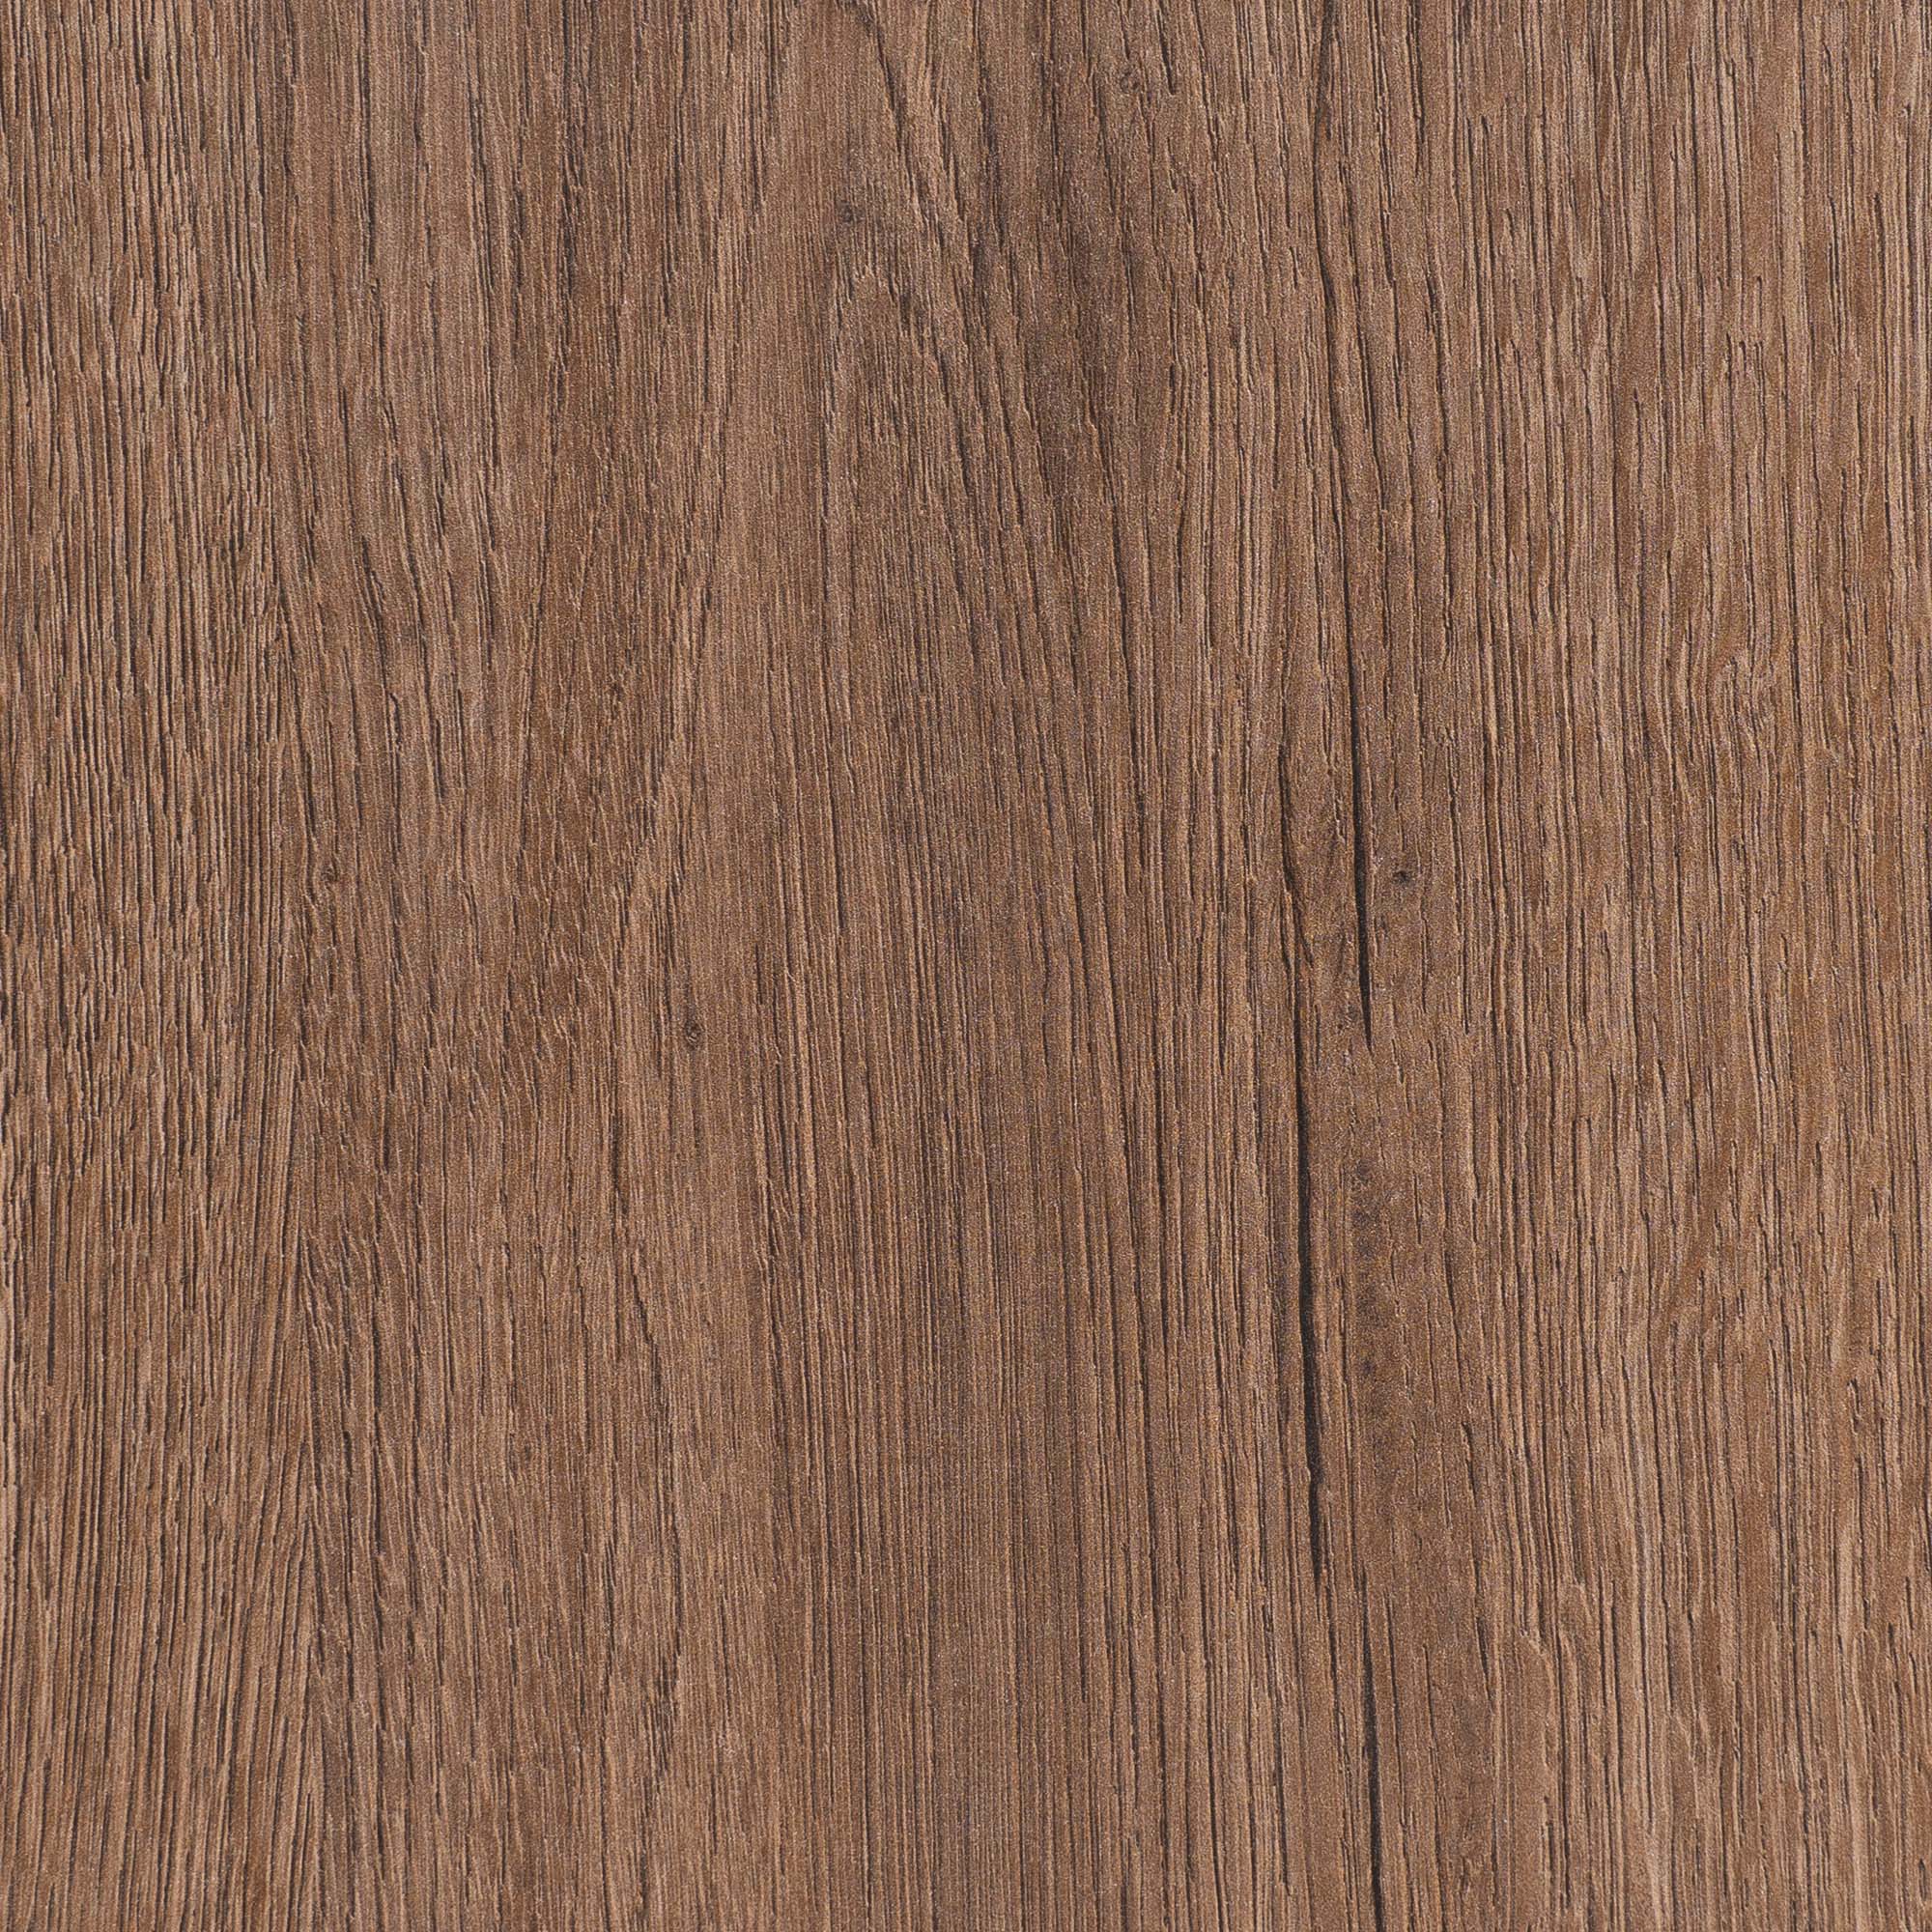 Mod Cabinetry Euro Line Textura Anniversary oak 3 texture